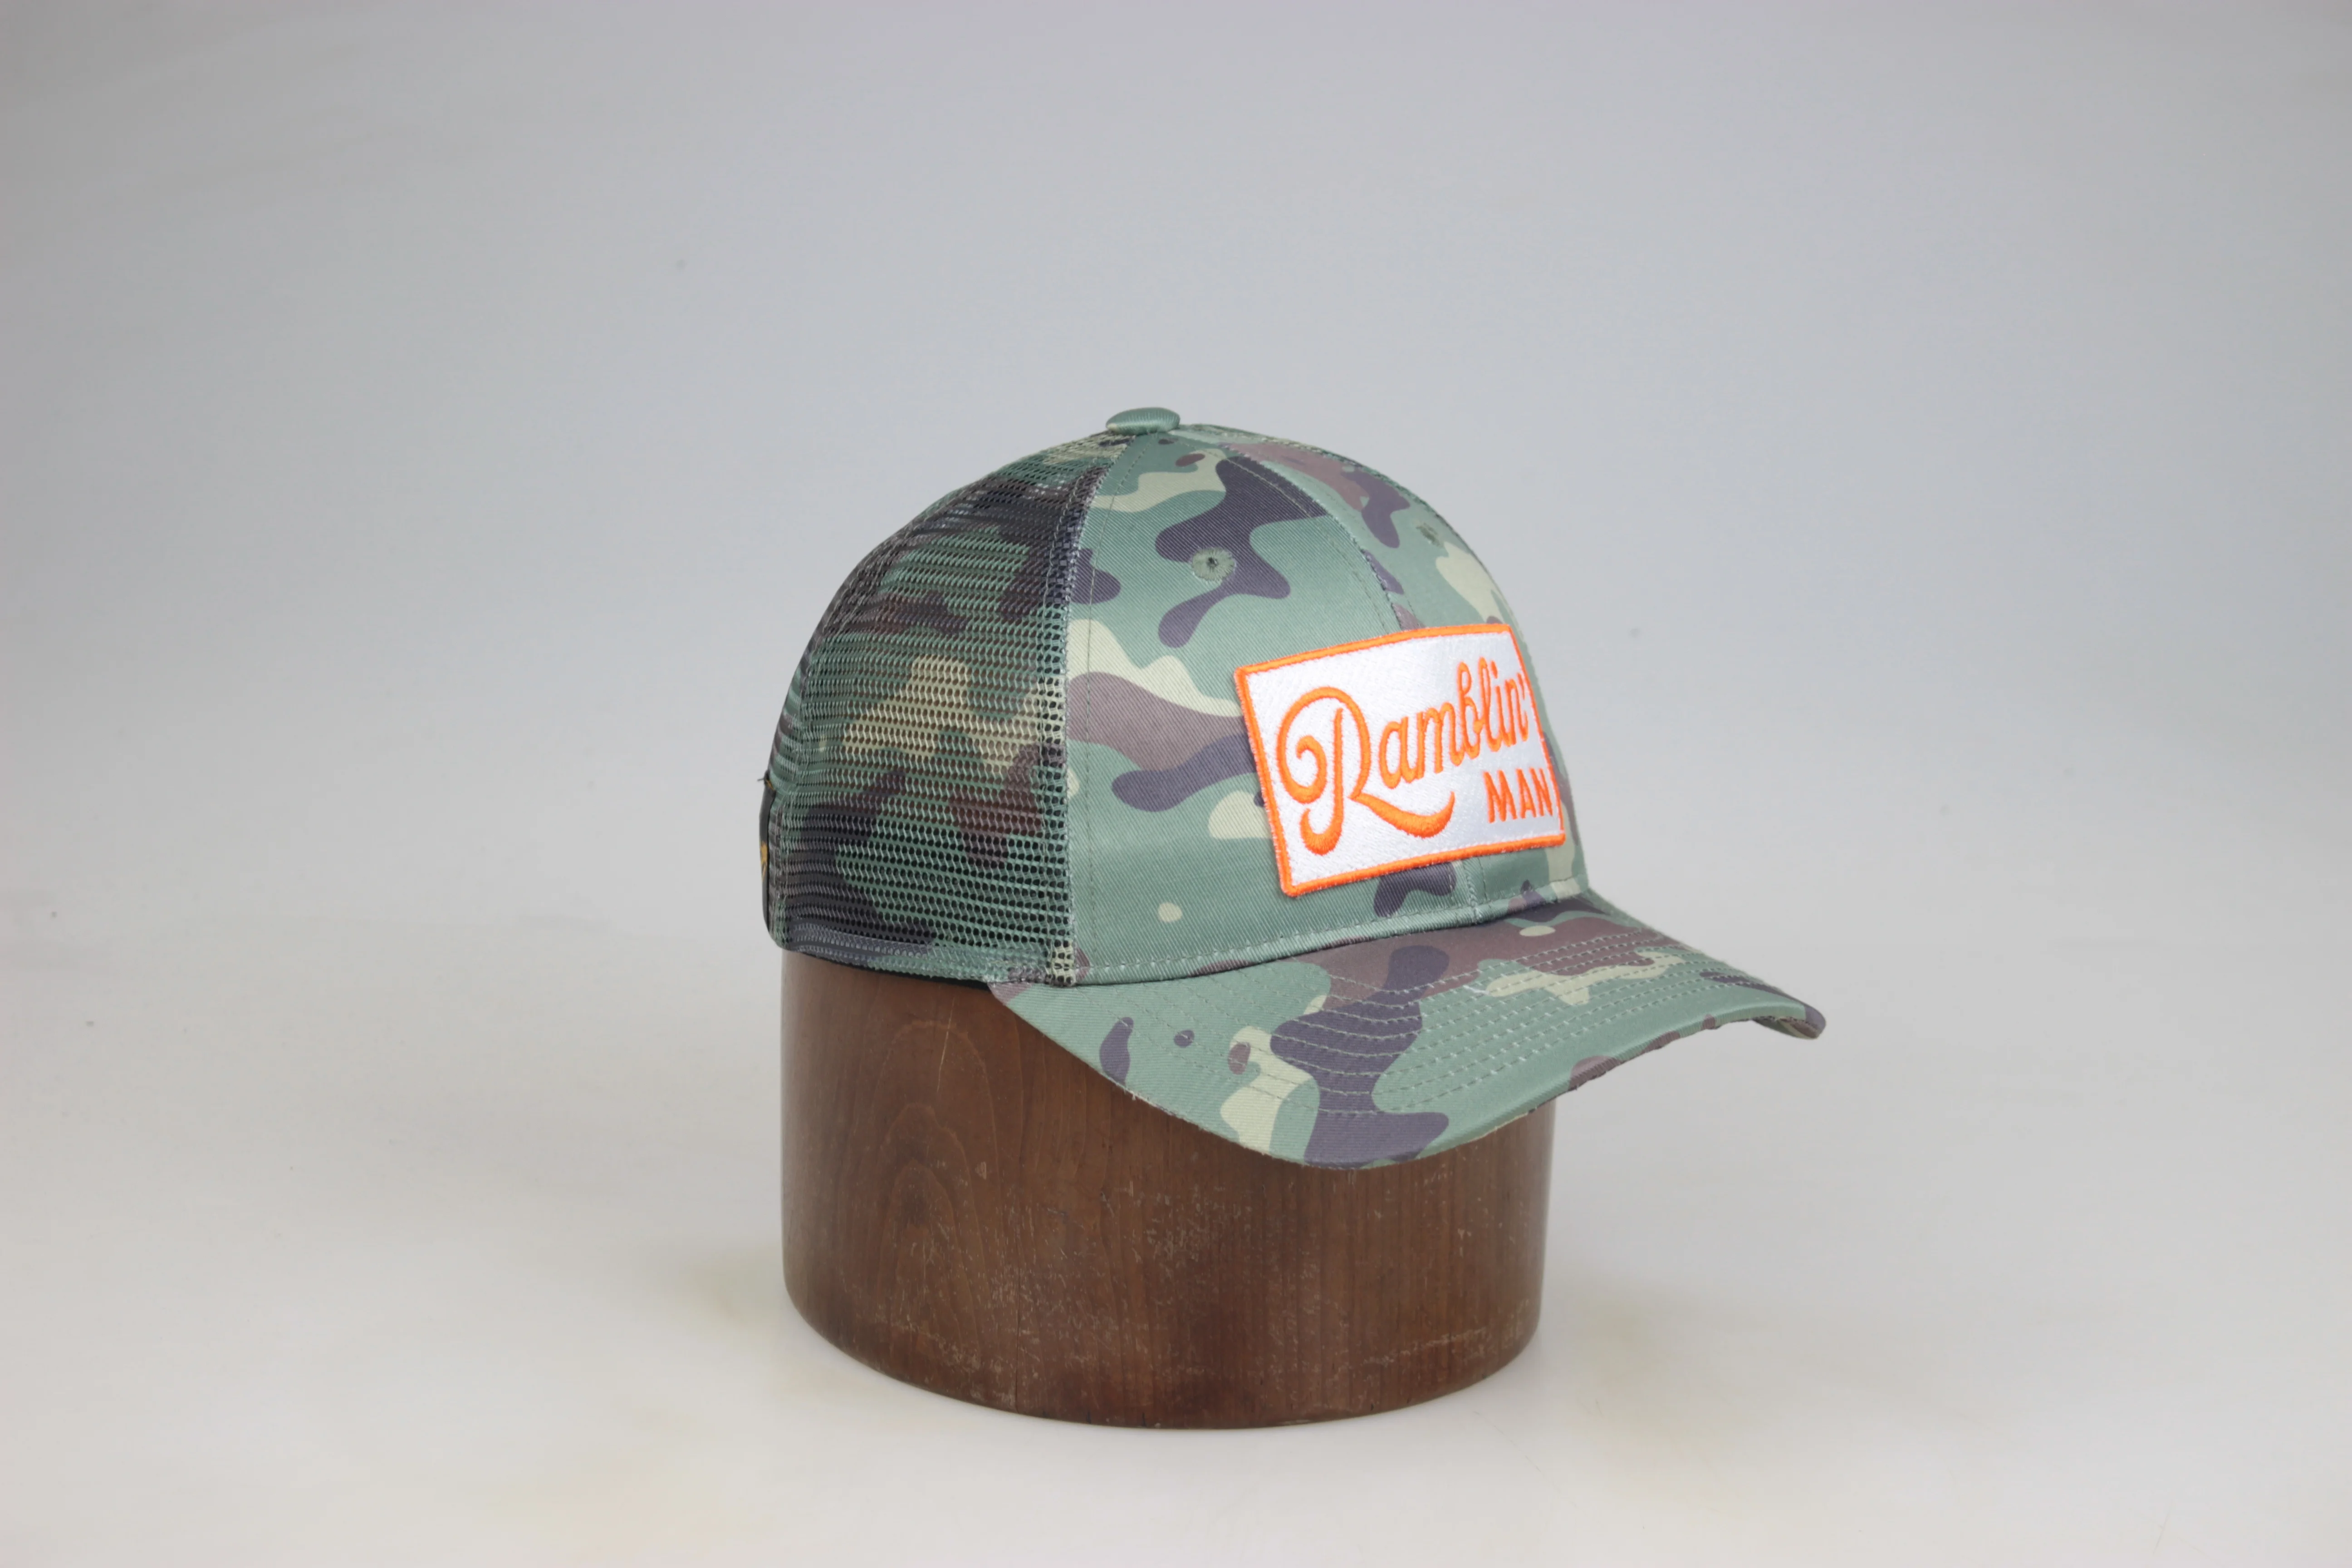 Unusual camouflage hat is very distinctive polyester mesh new era design baseball cap